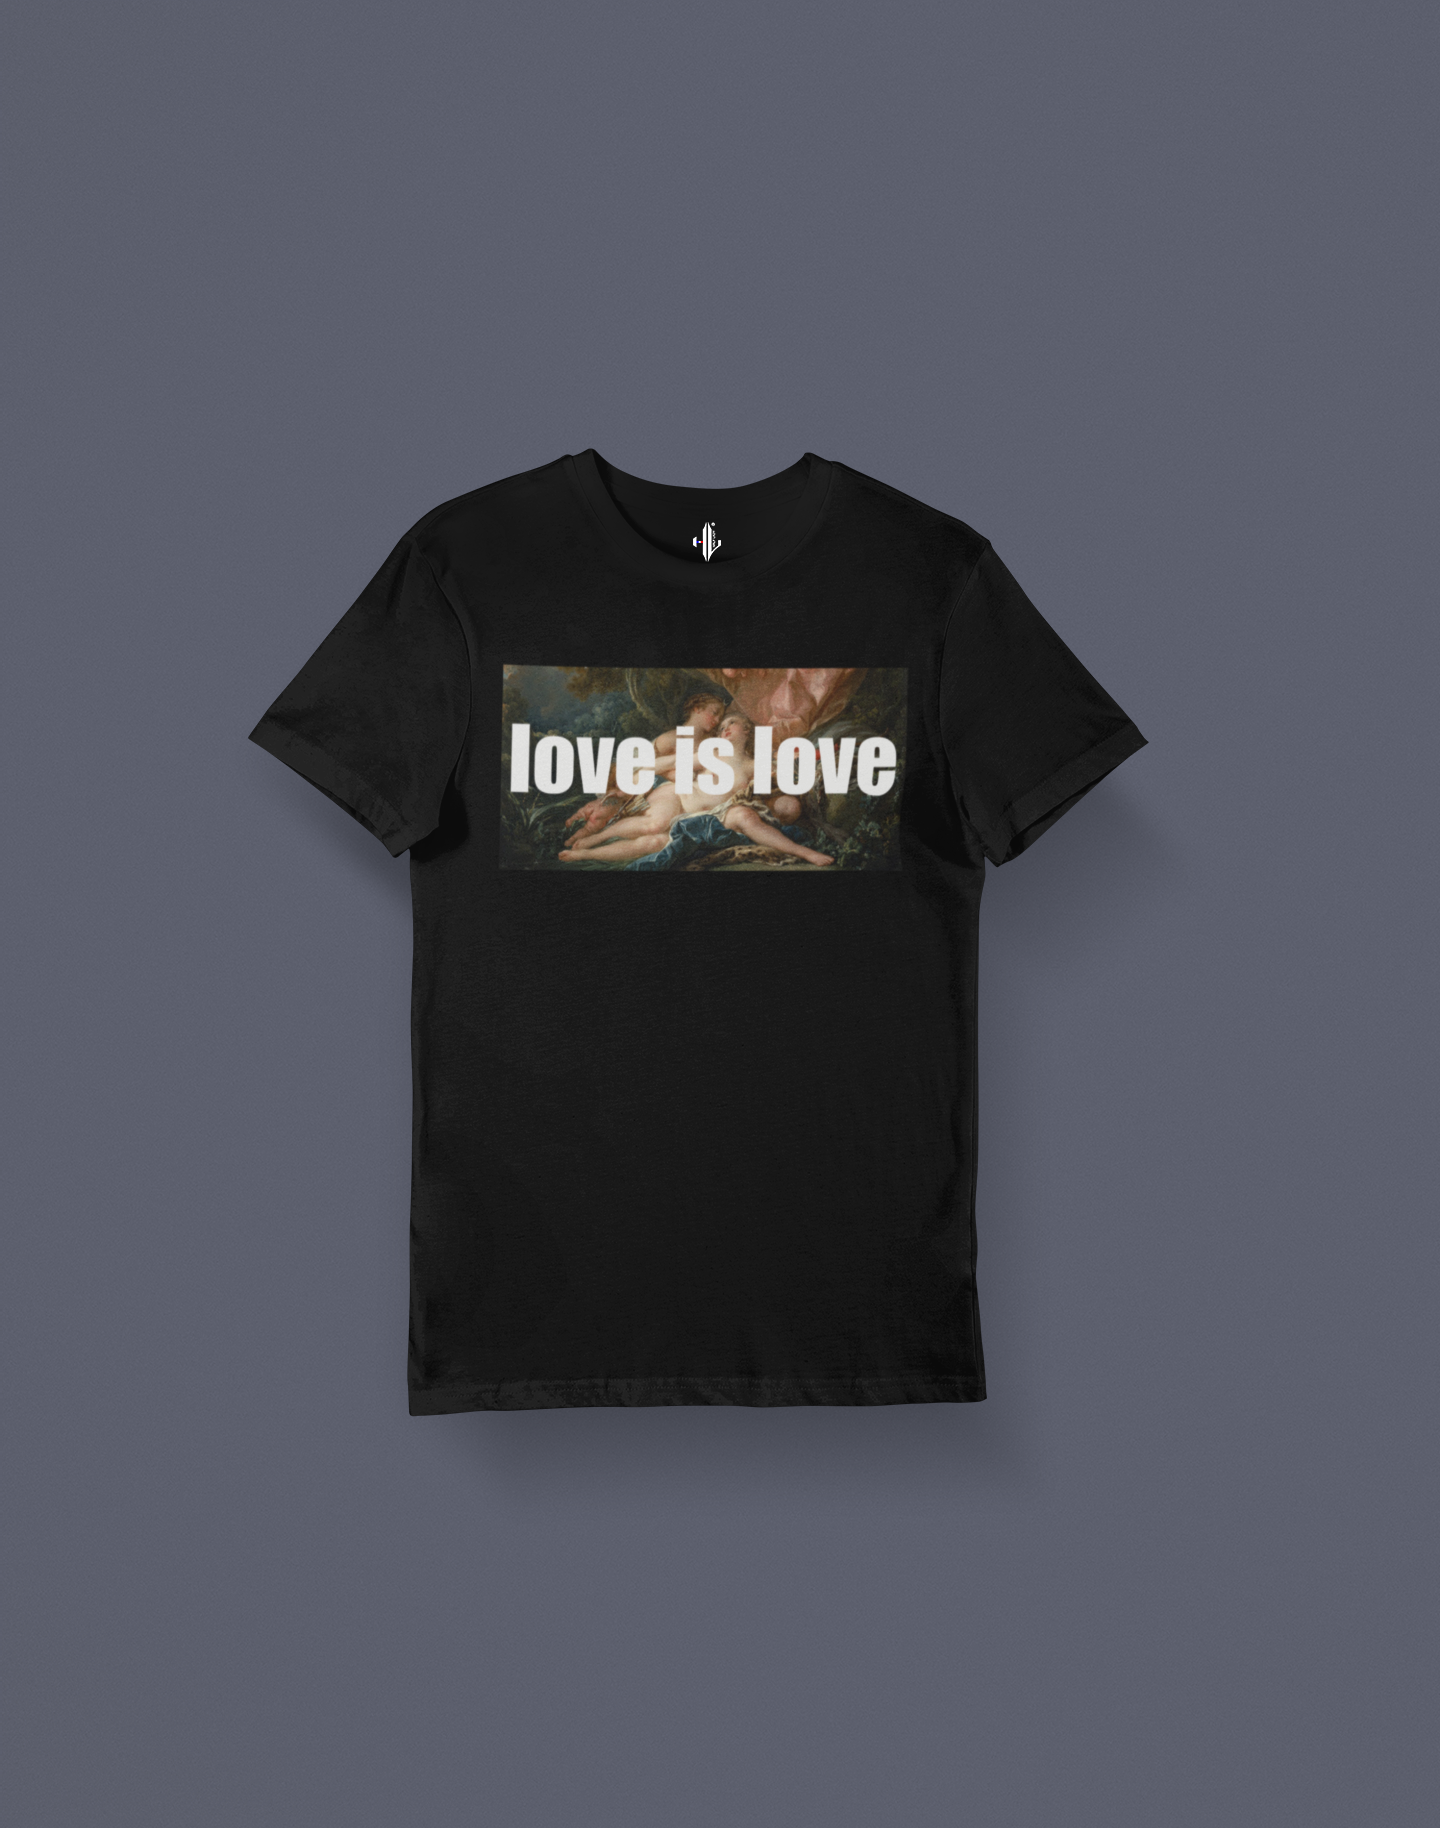 T-SHIRT "LOVE IS LOVE"